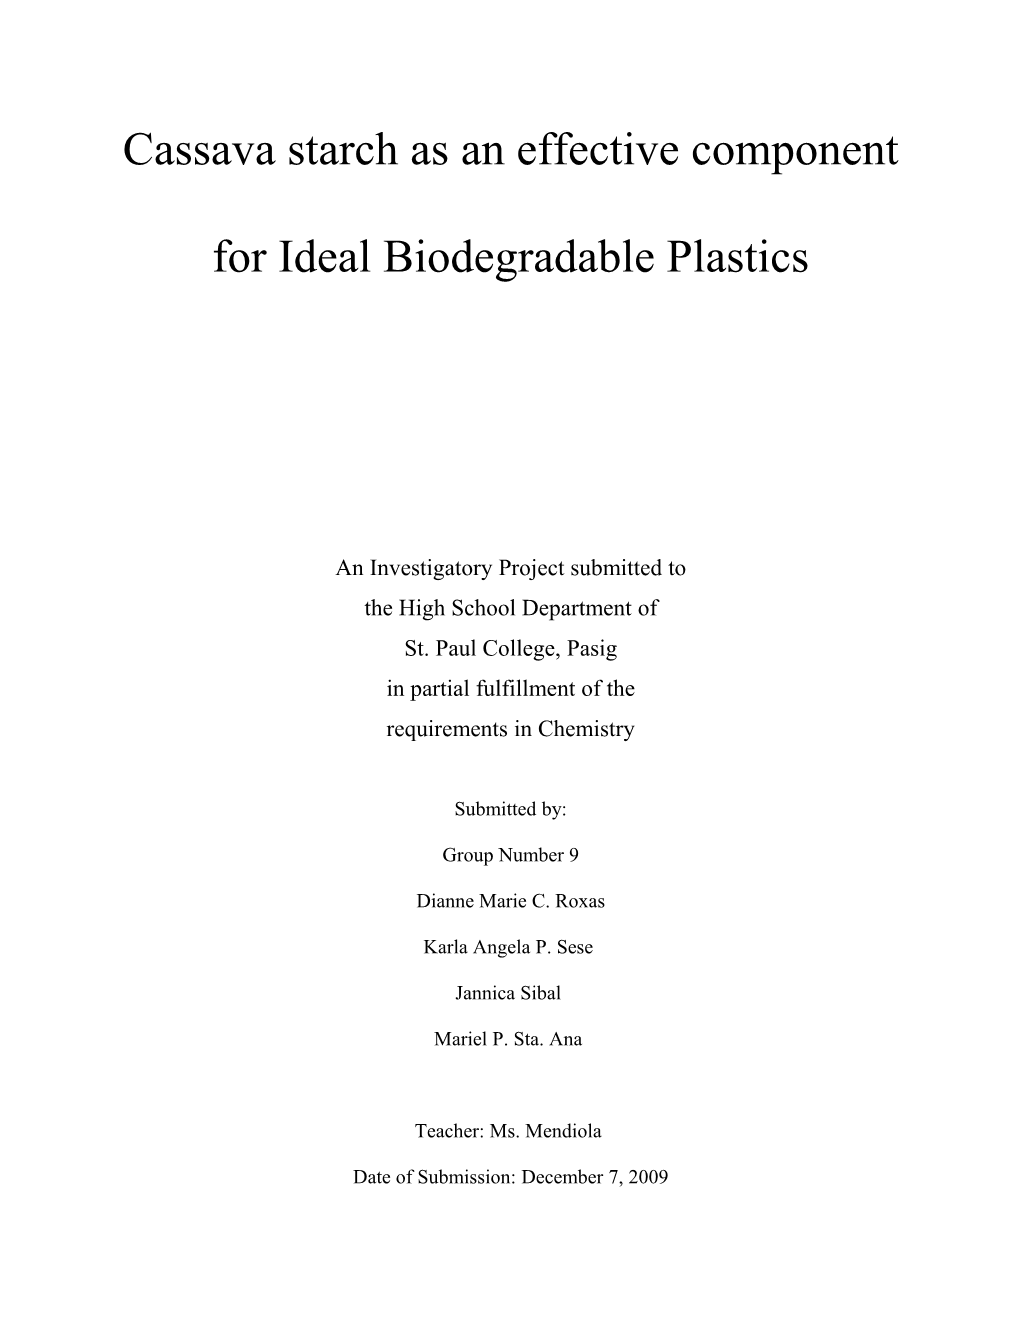 Cassava Starch As an Effective Component for Ideal Biodegradable Plastics